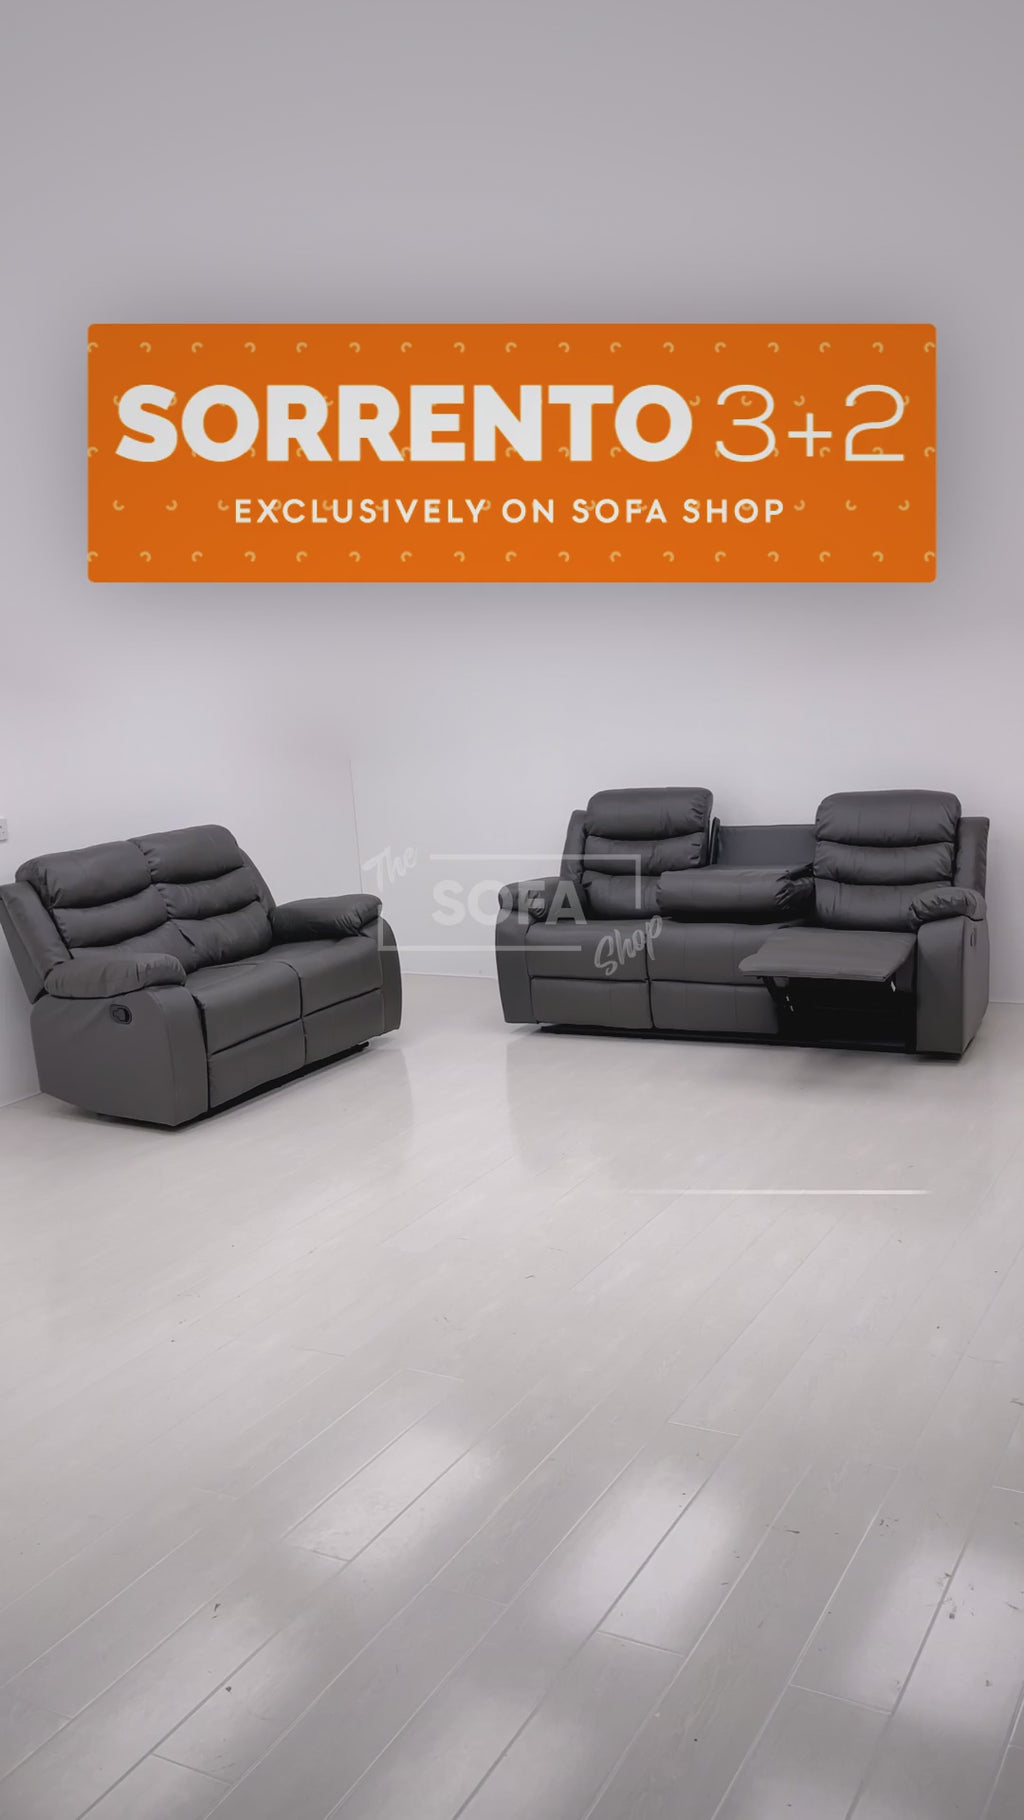 Sorrento 2 Seater in Grey Leather Recliner Sofa Video Description- The Sofa Shop